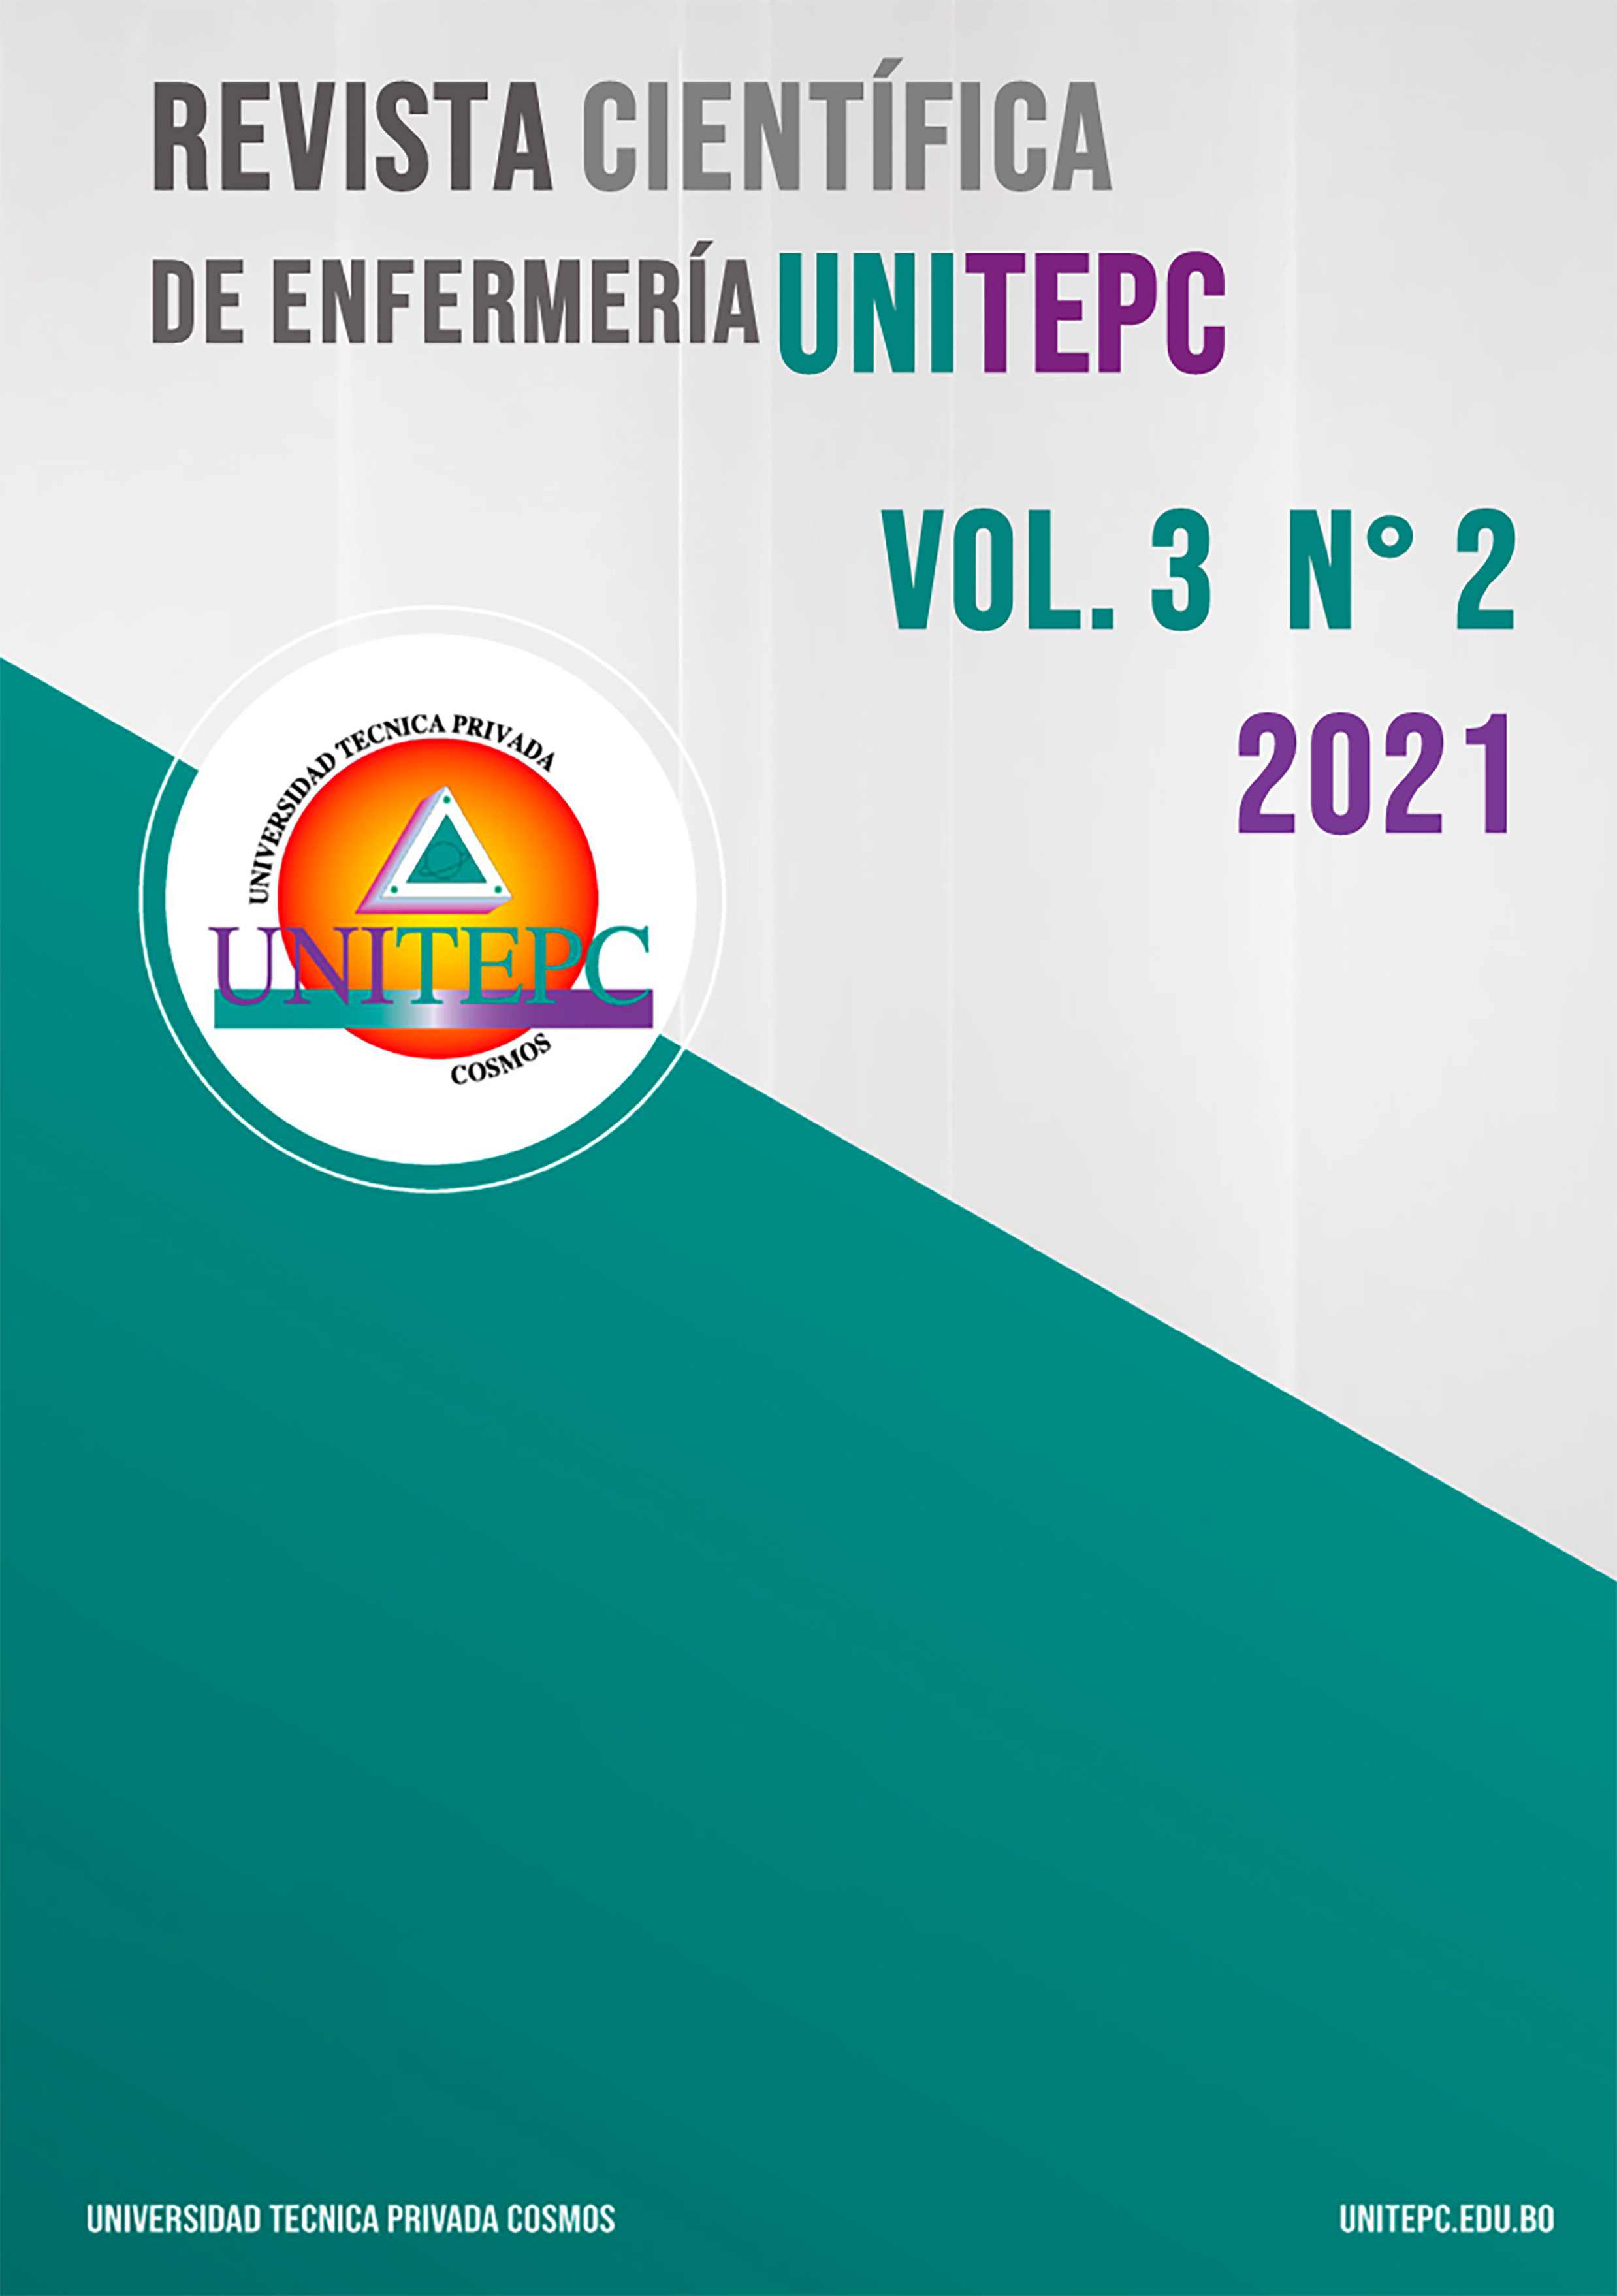 					Visualizar v. 3 n. 2 (2021): Revista Científica de Enfermería UNITEPC
				